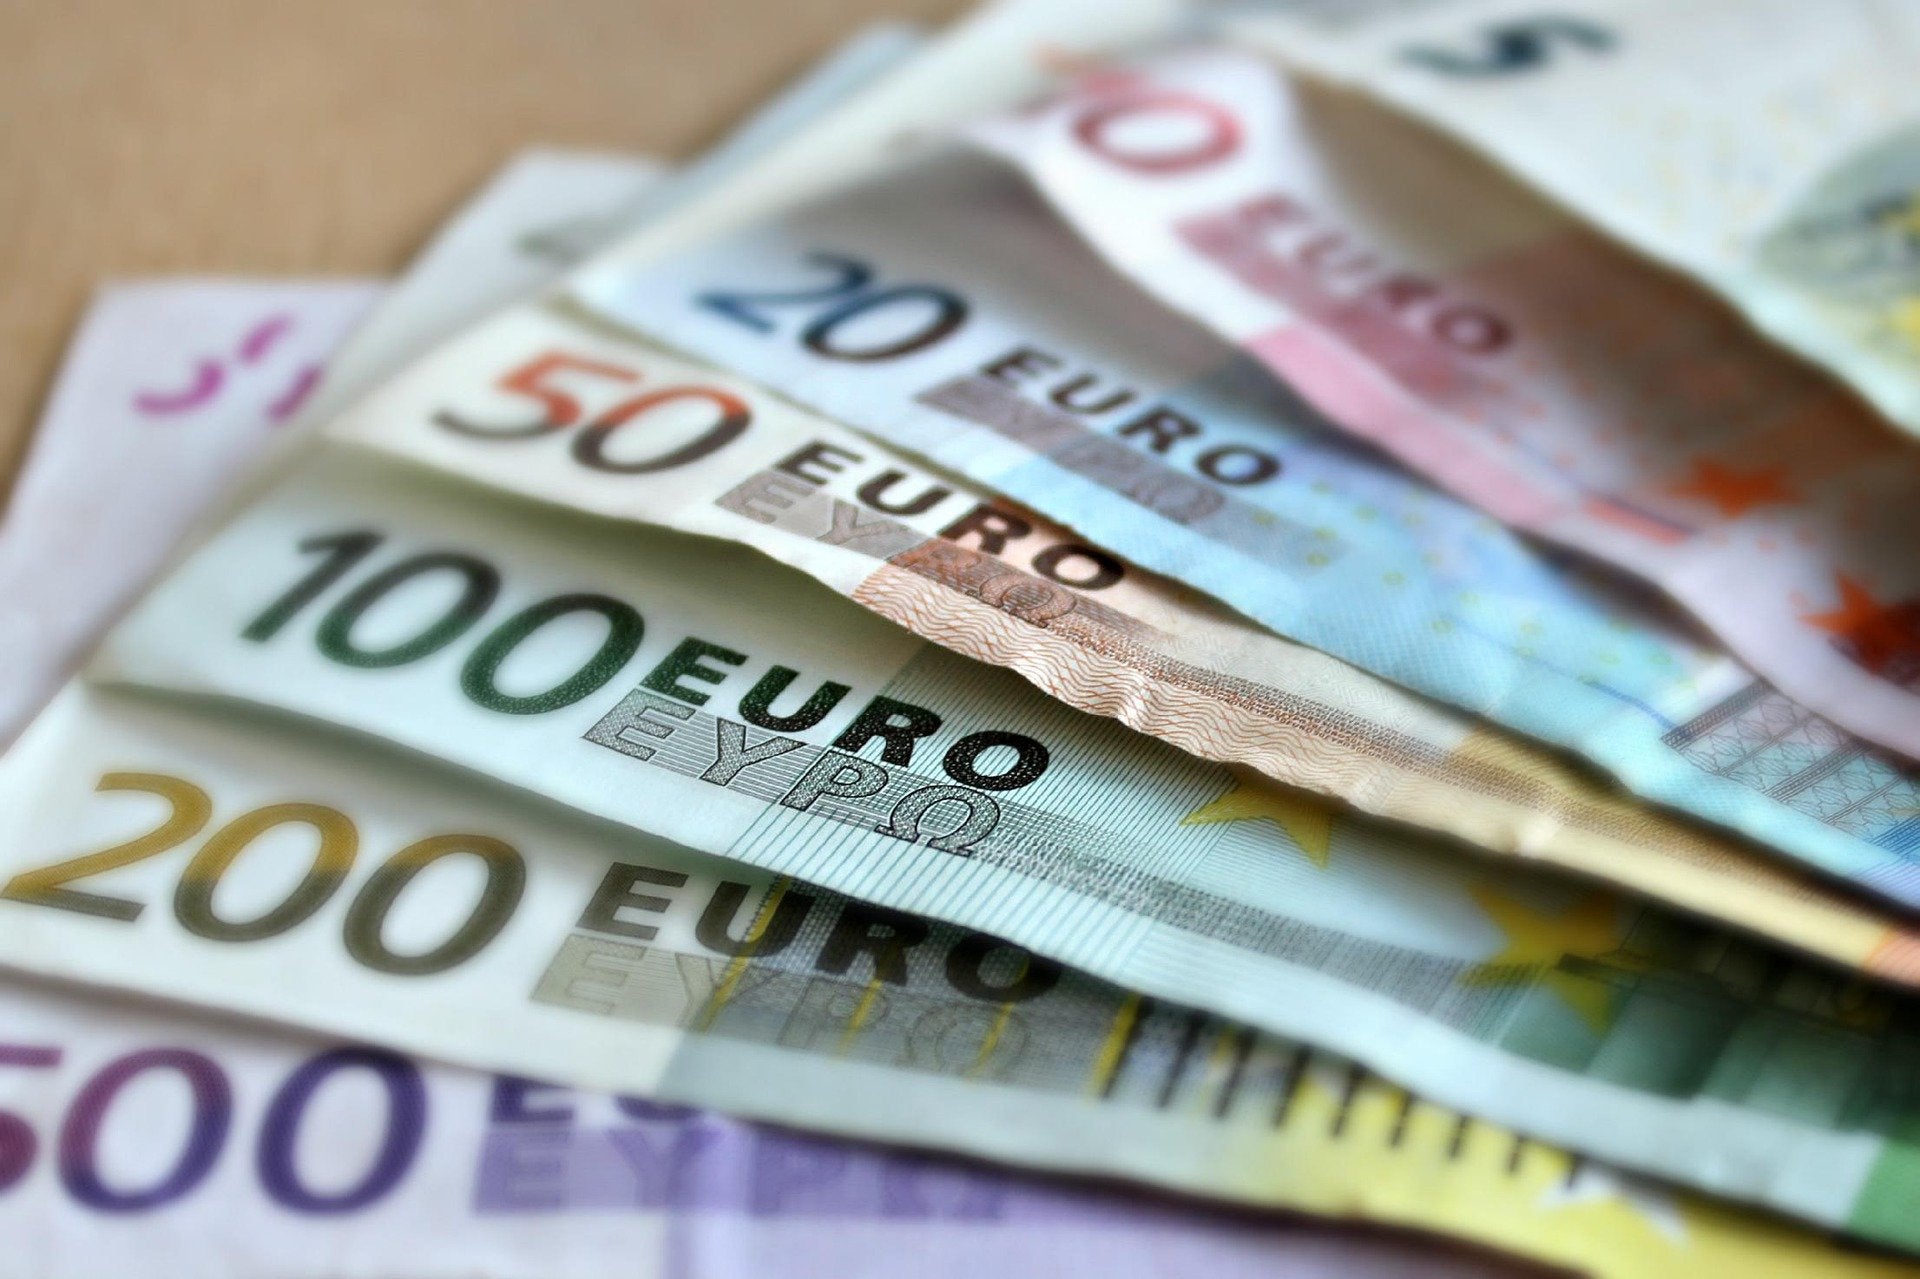 Italy’s Satispay attains unicorn status after €320m Series D funding round